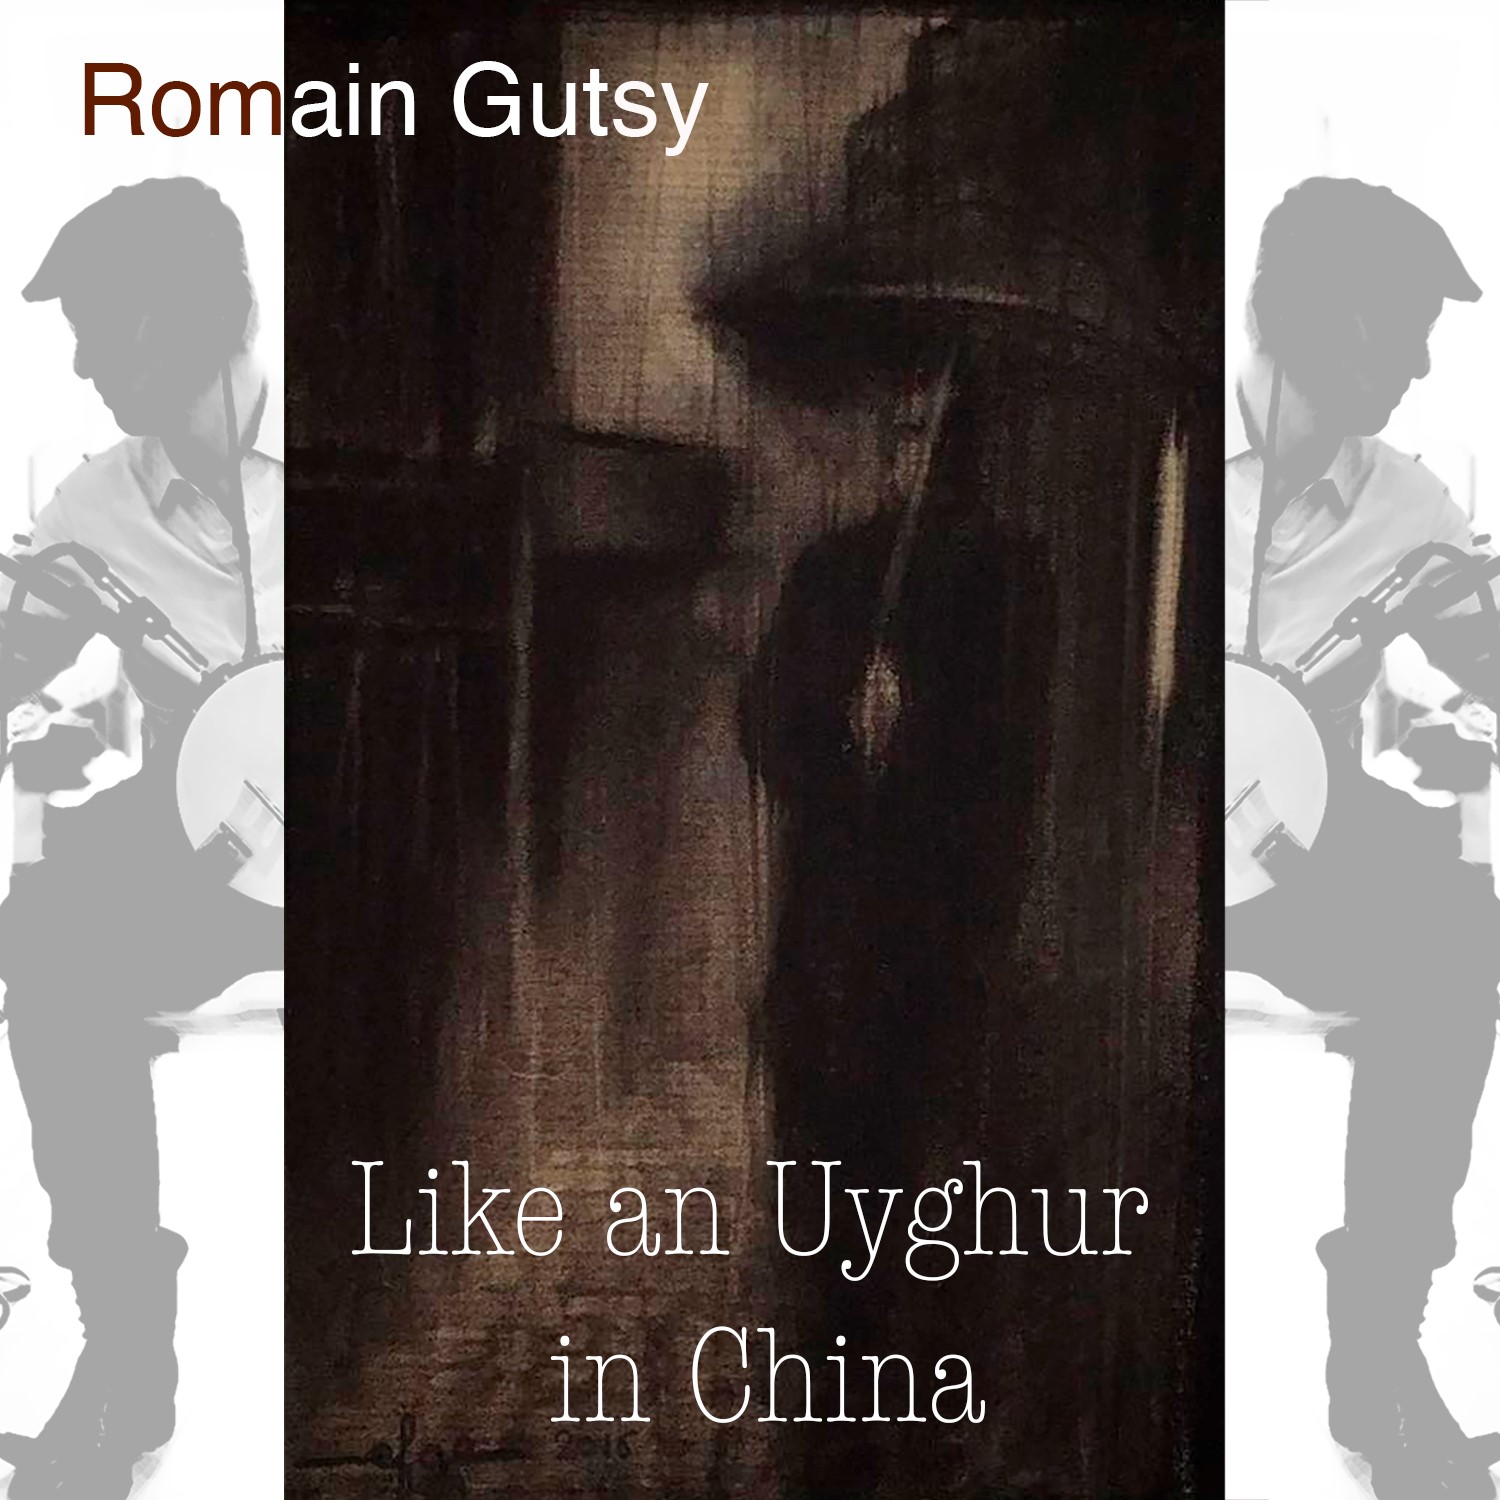 Romain Gutsy’s new single “Like an Uyghur in China”